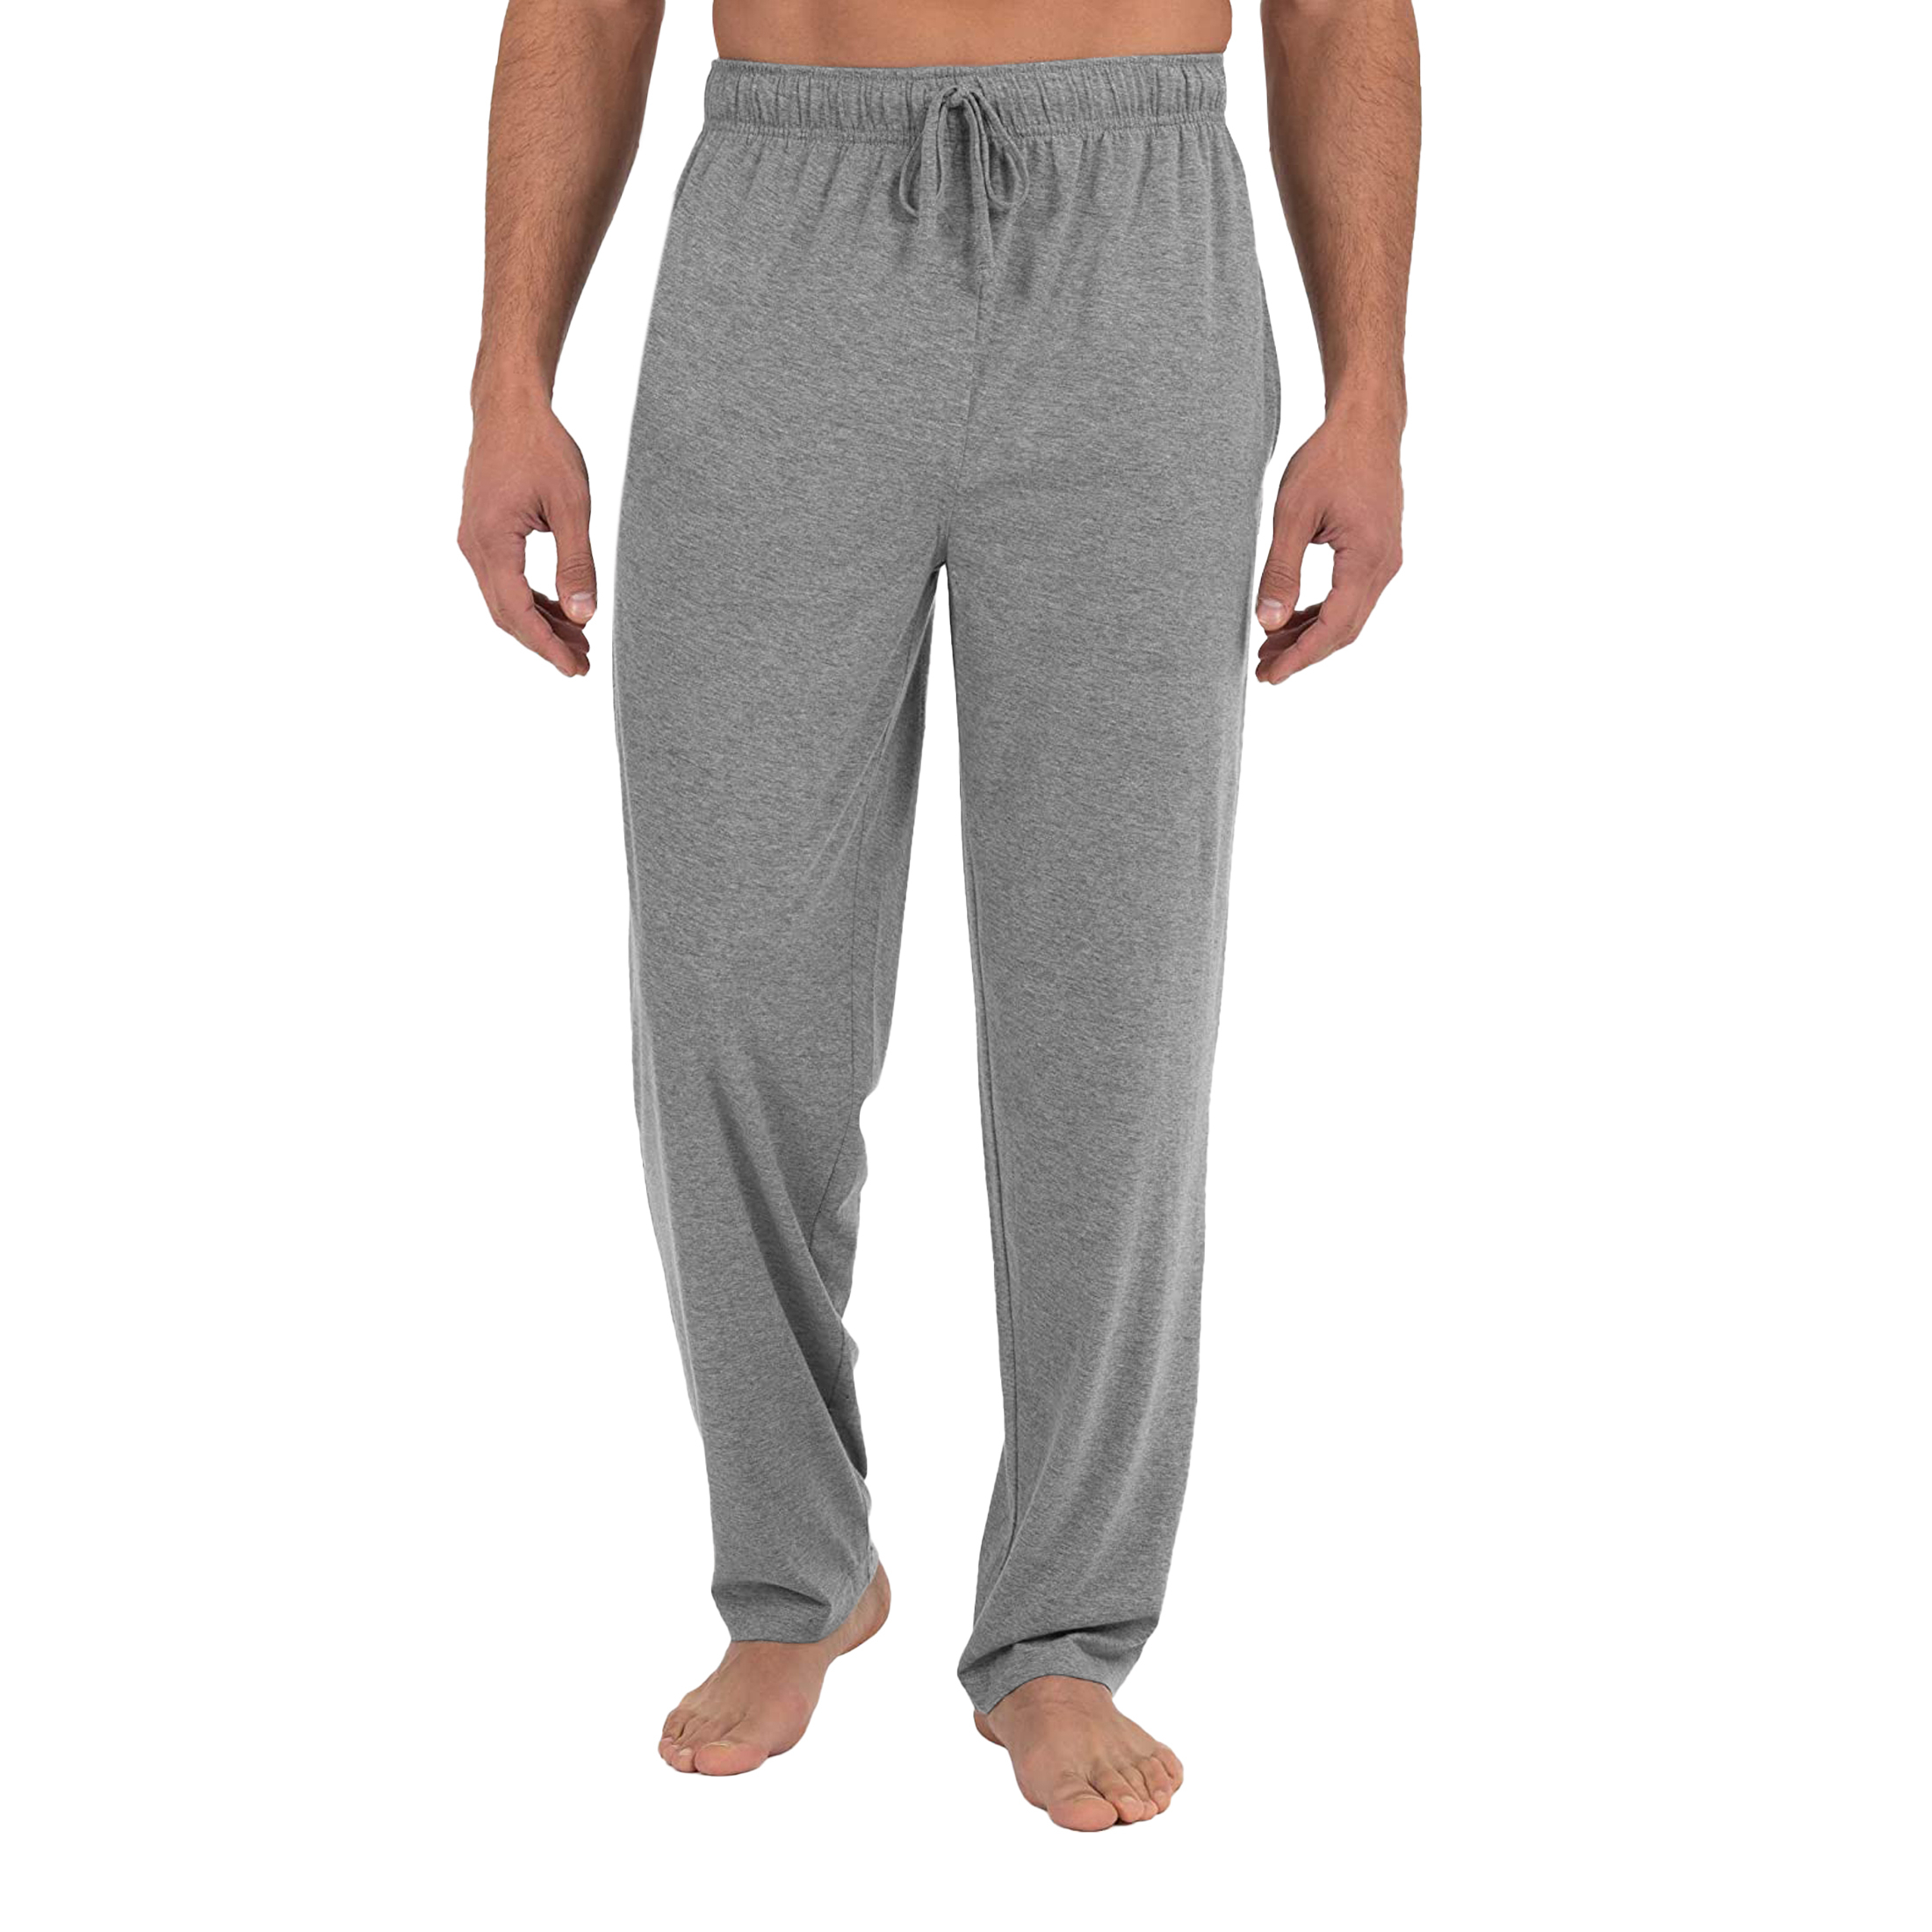 Men's Soft Jersey Knit Long Lounge Sleep Pants With Pockets - Plaid, Medium